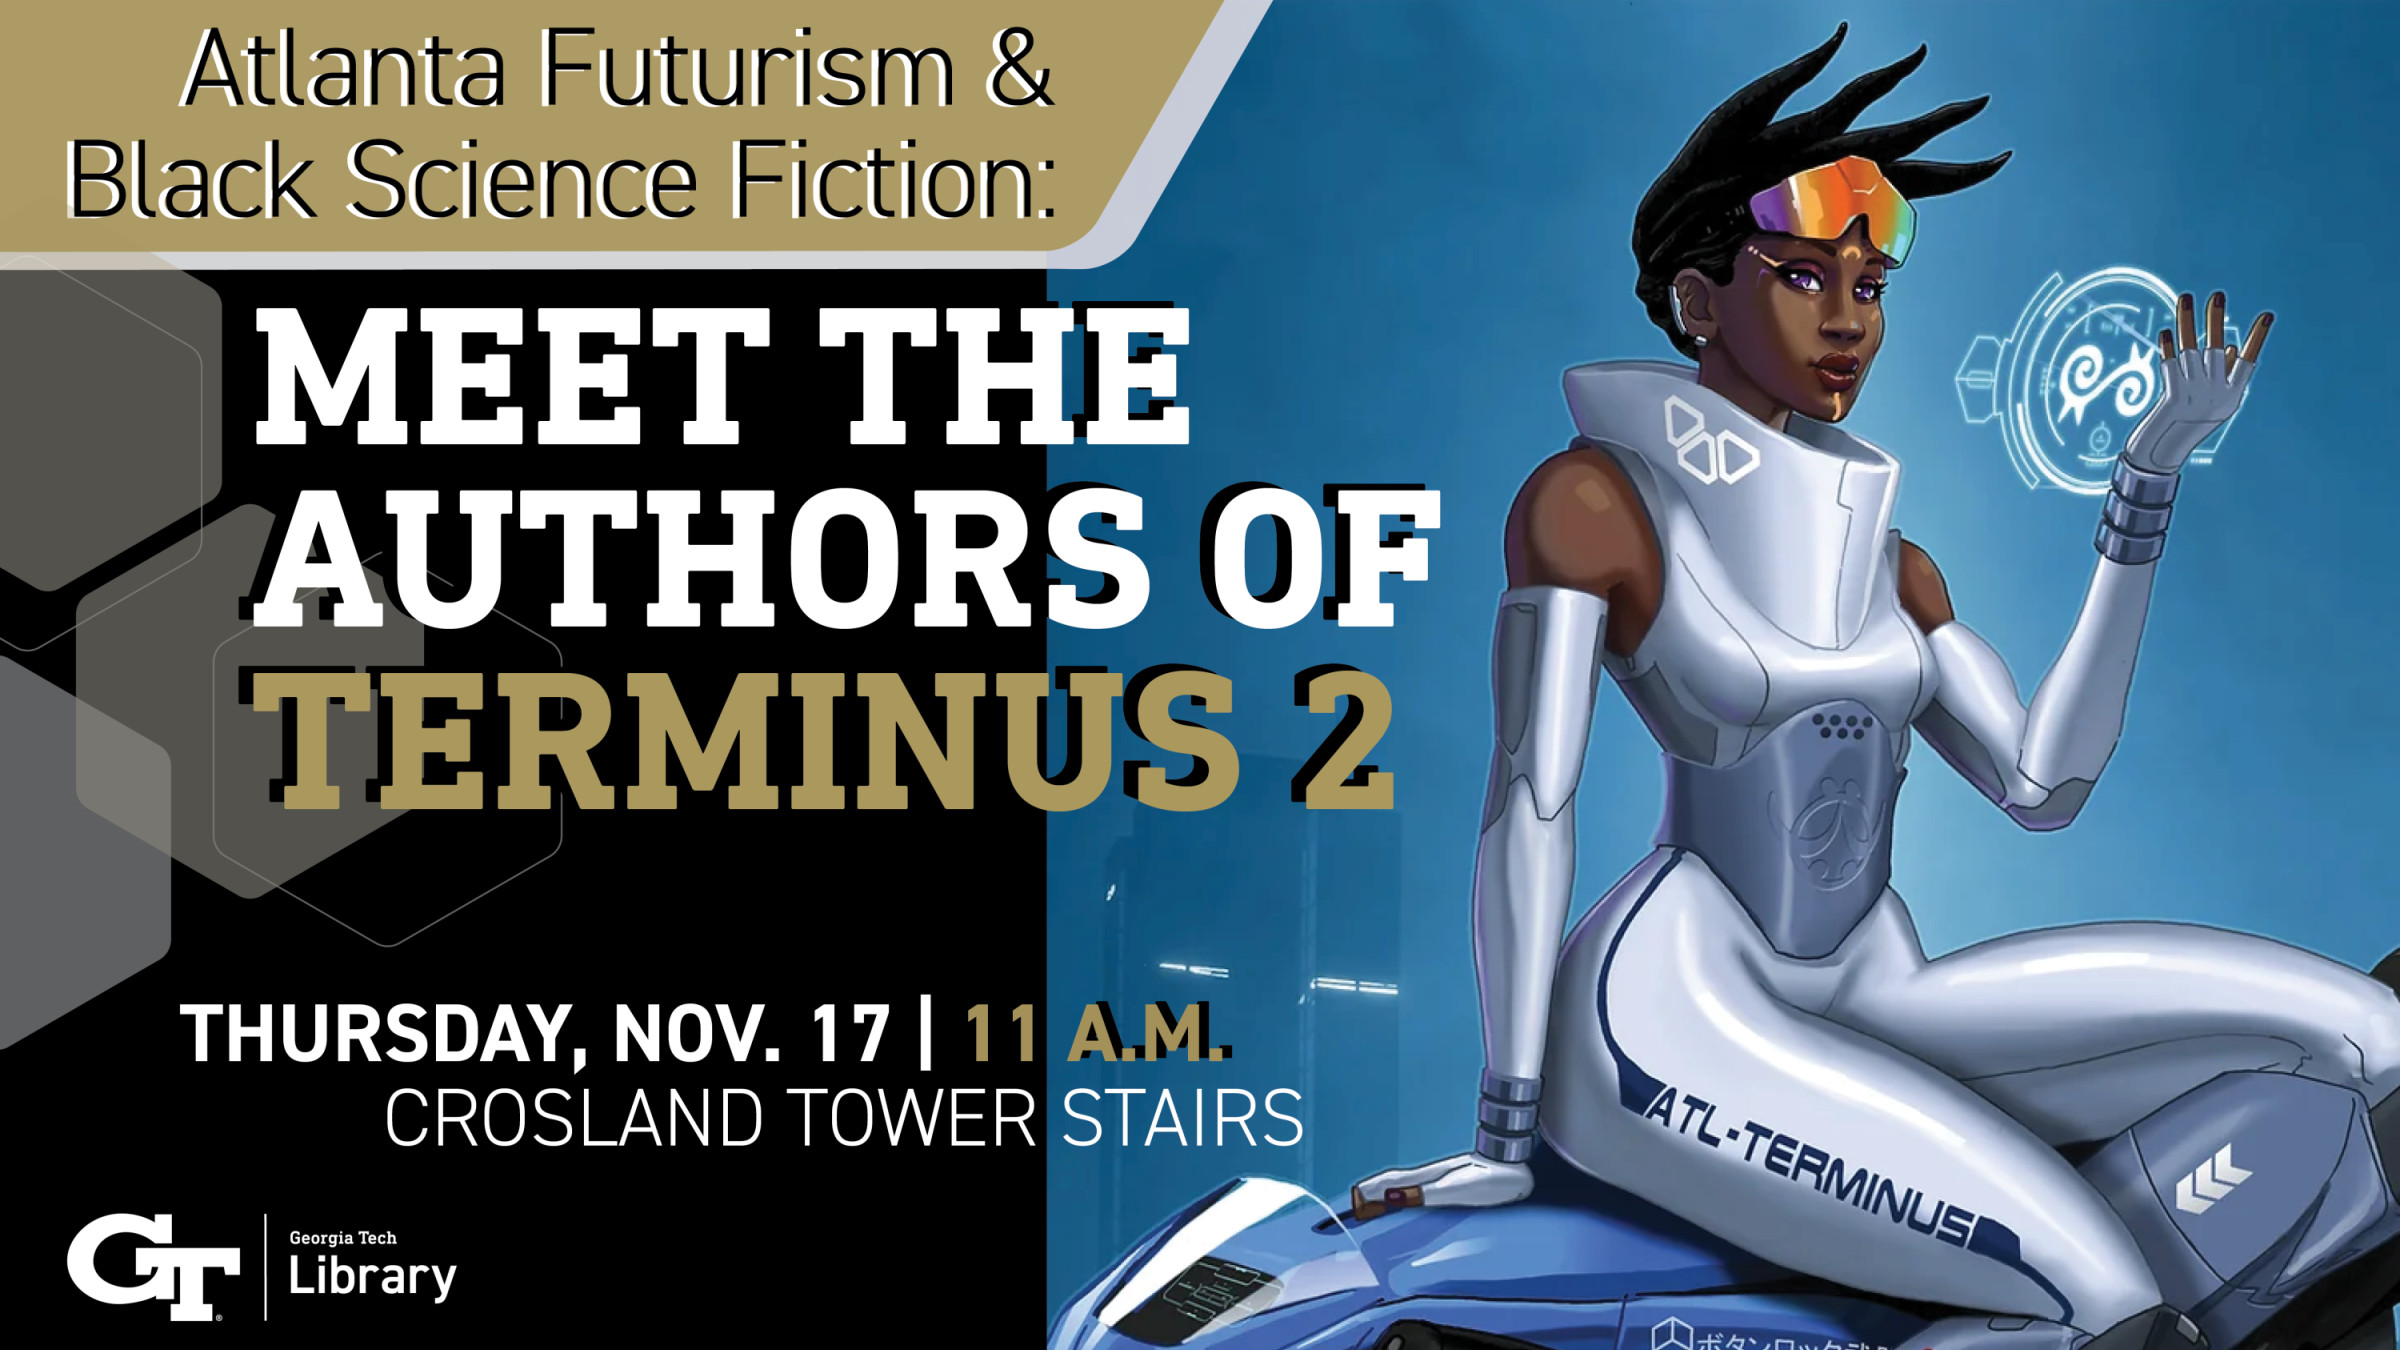 Atlanta Futurism & Black Science Fiction: Meet the Authors of Terminus 2